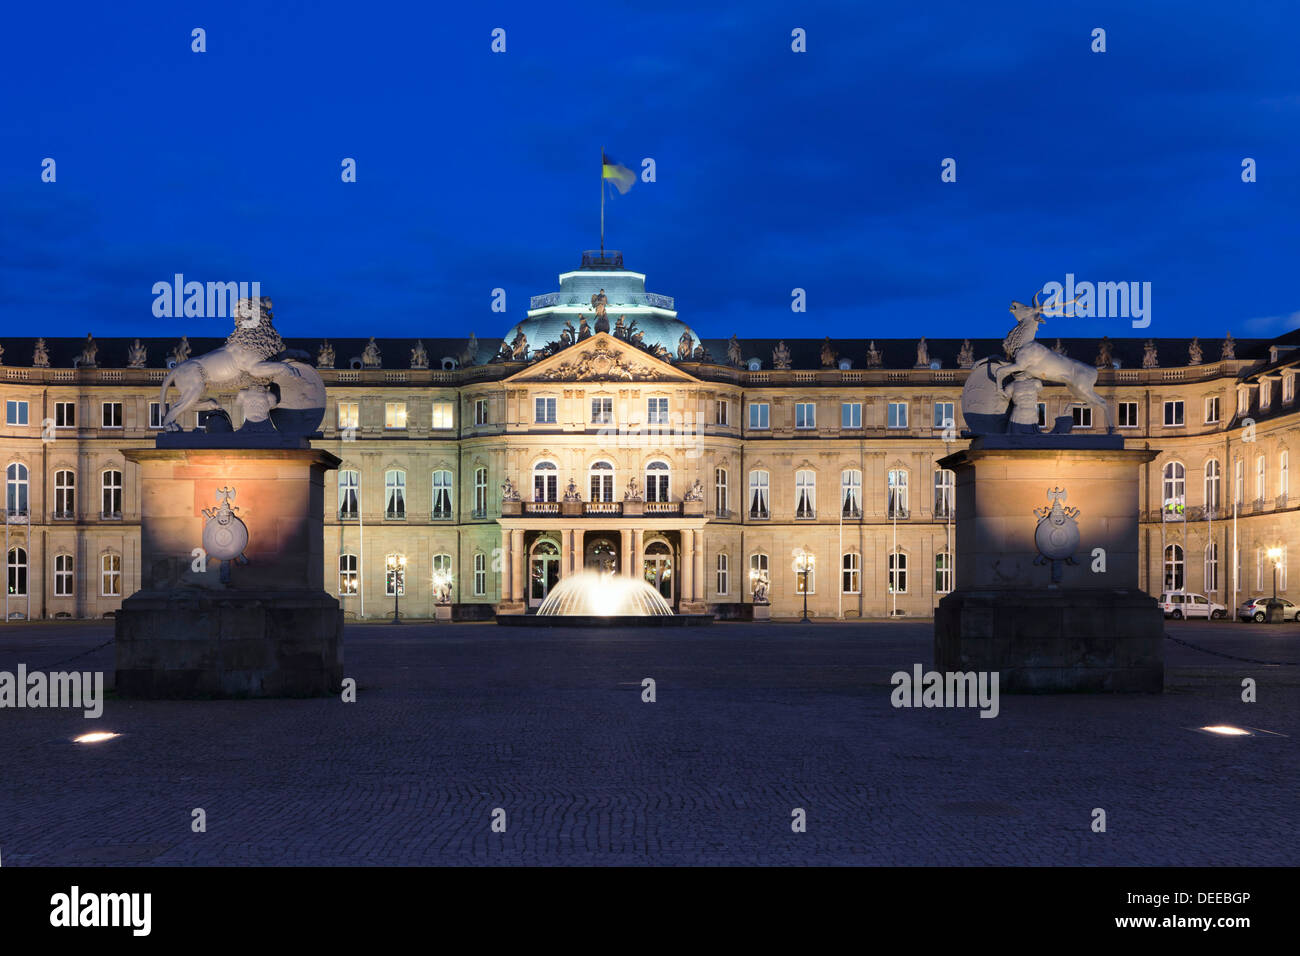 Neues Schloss castle at Schlossplatz Square, Stuttgart, Baden Wurttemberg, Germany, Europe Stock Photo